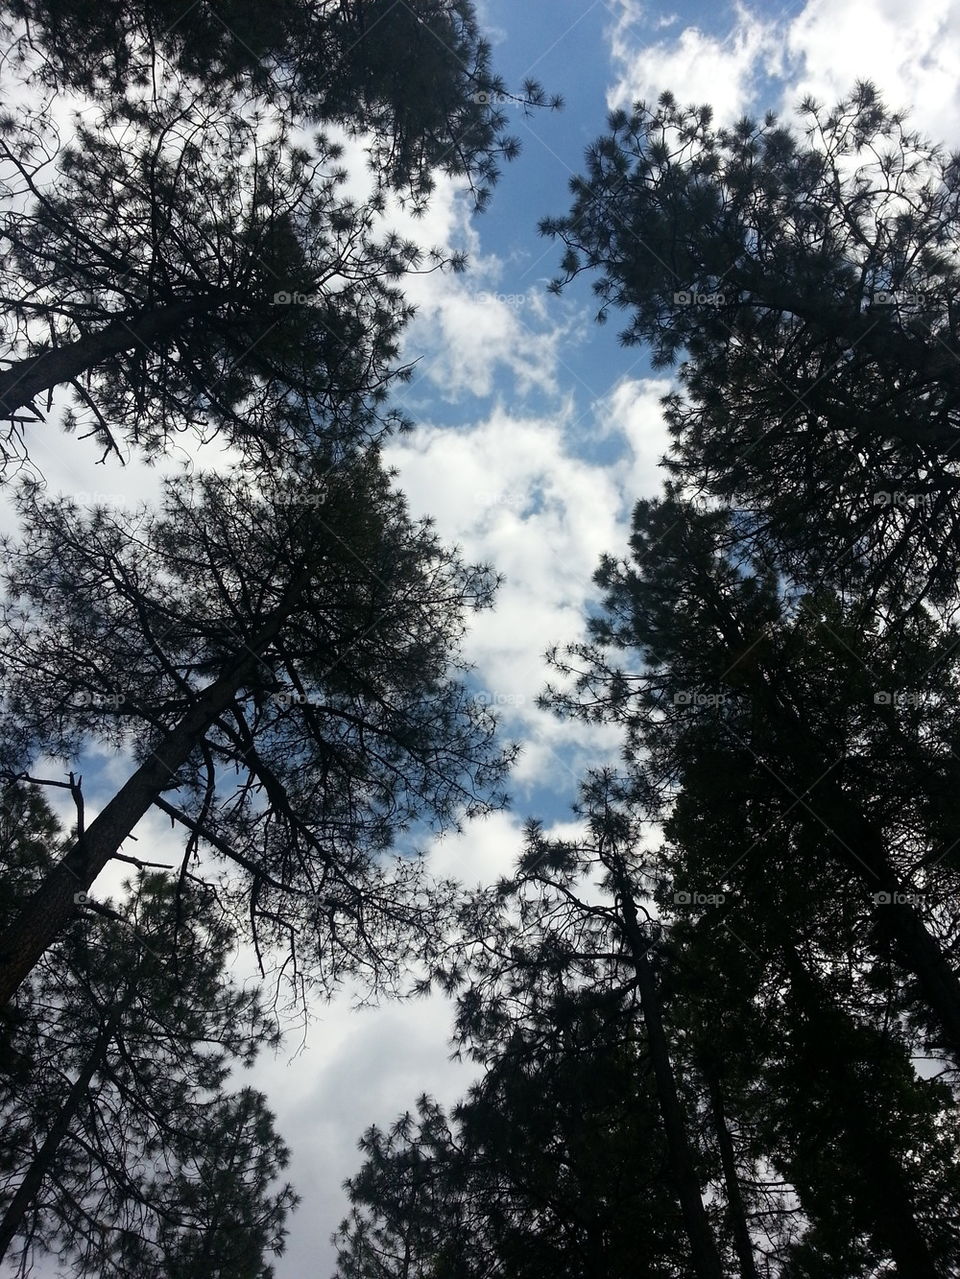 Pines.